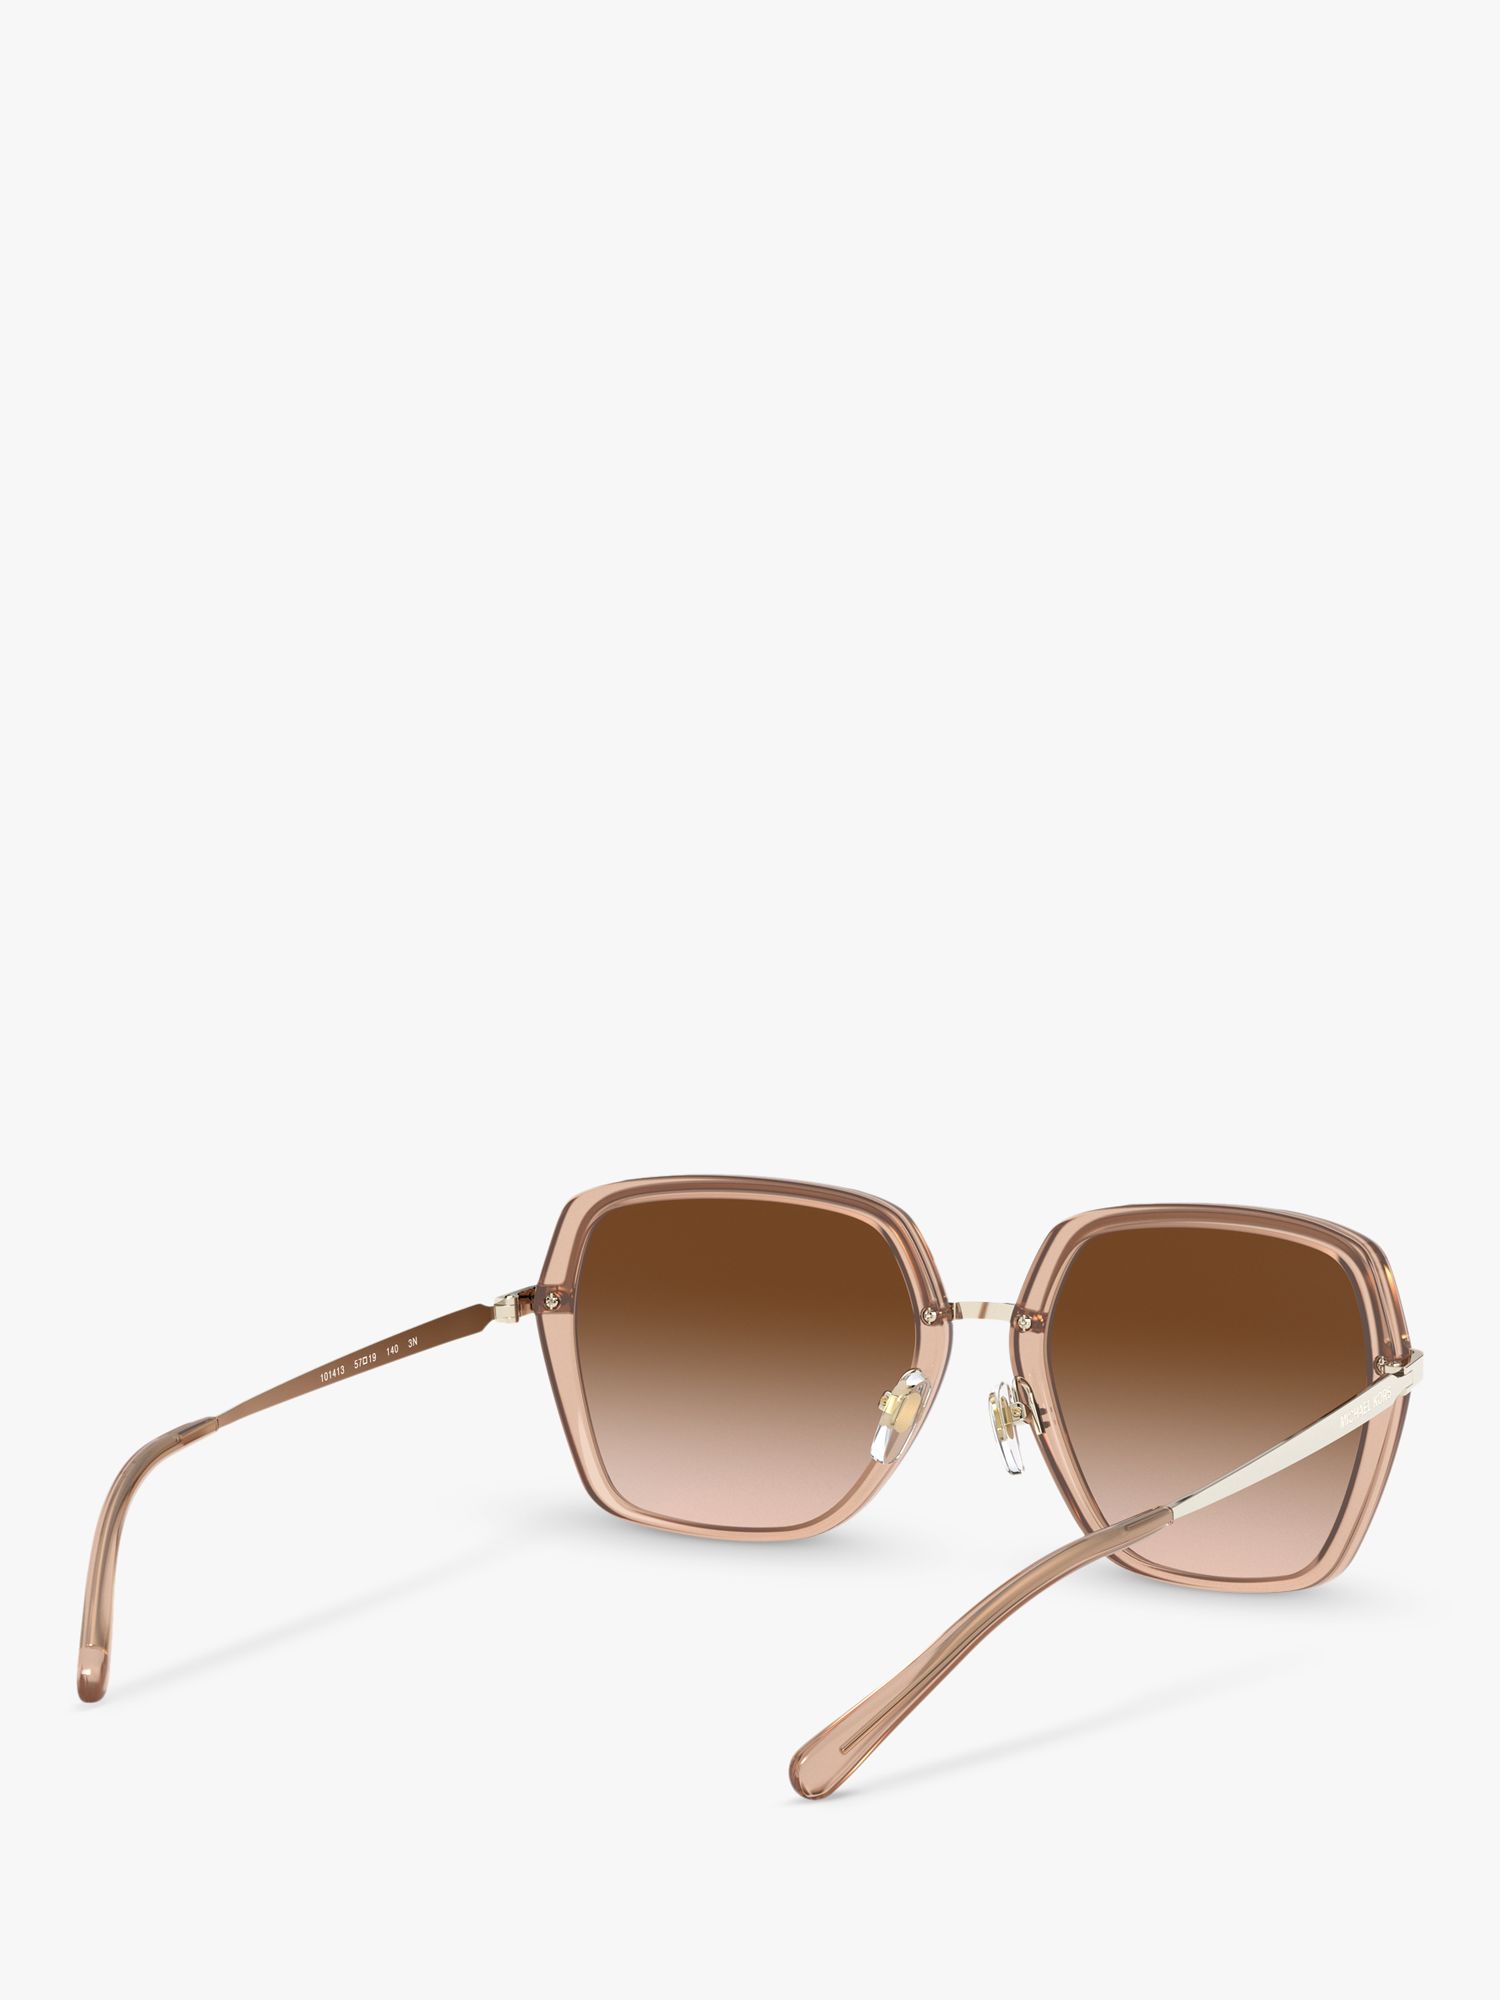 Michael Kors Mk1075 Women S Naples Square Sunglasses Light Gold Brown